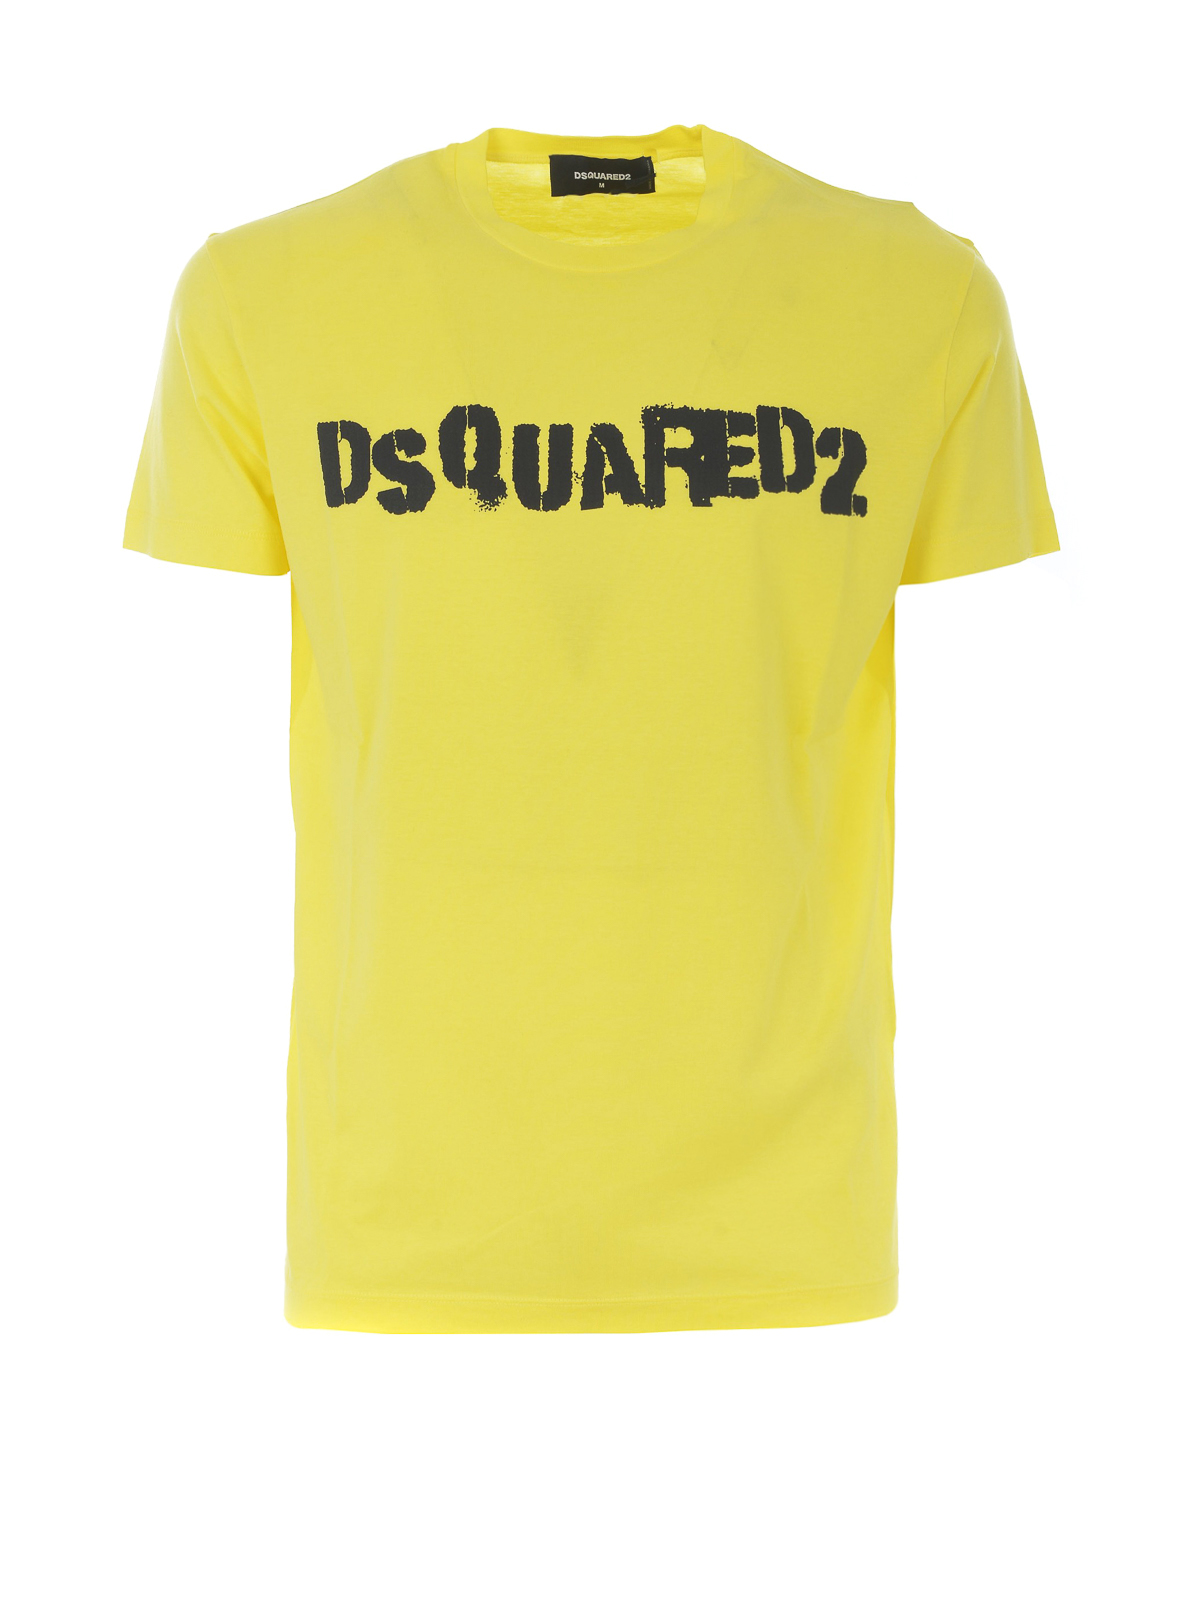 dsquared t shirt yellow